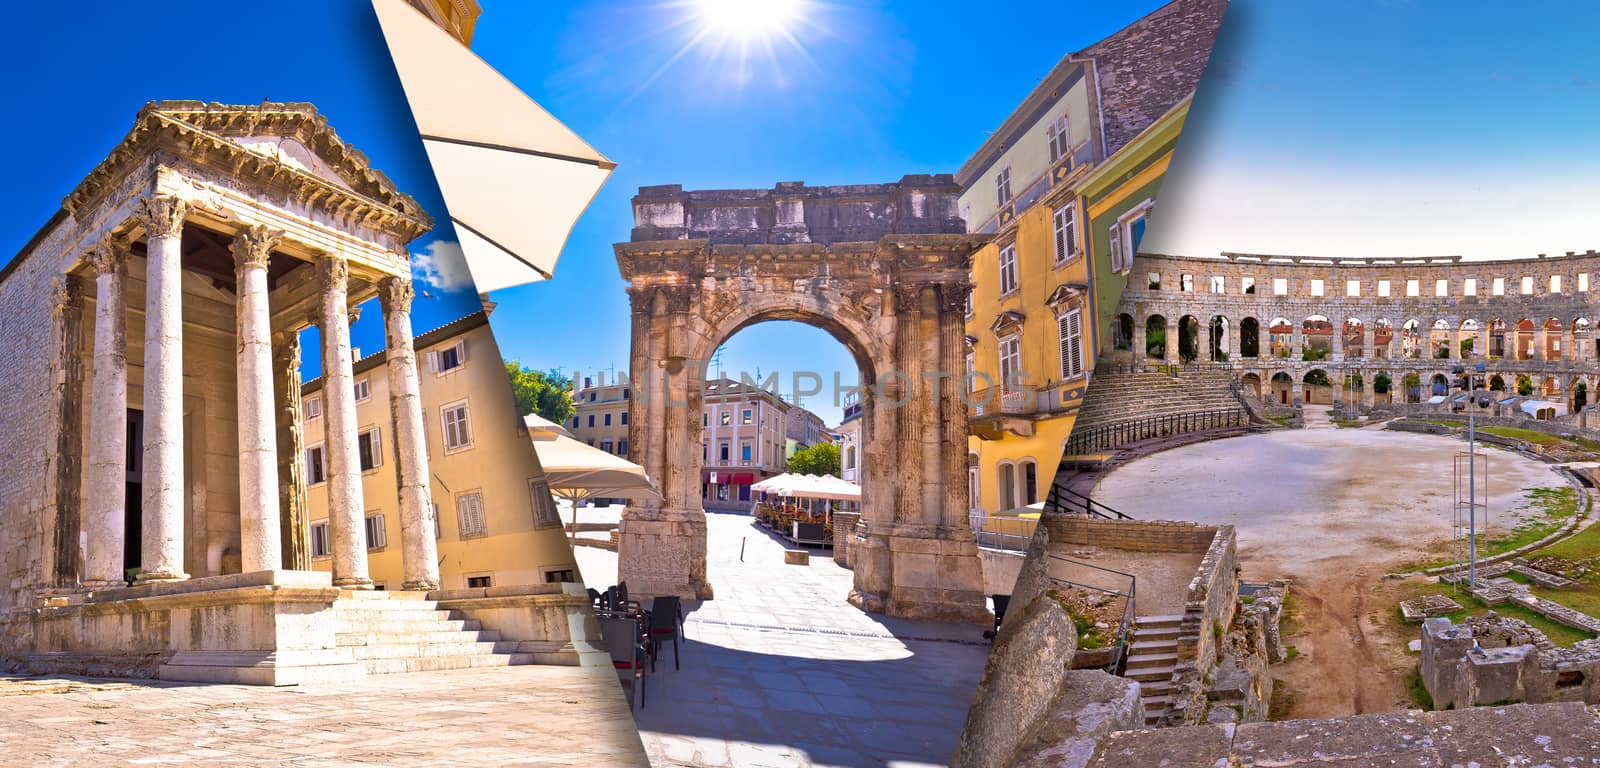 Town of Pula historic Roman landmarks panoramic collage tourist postcard view, Istria region of Croatia